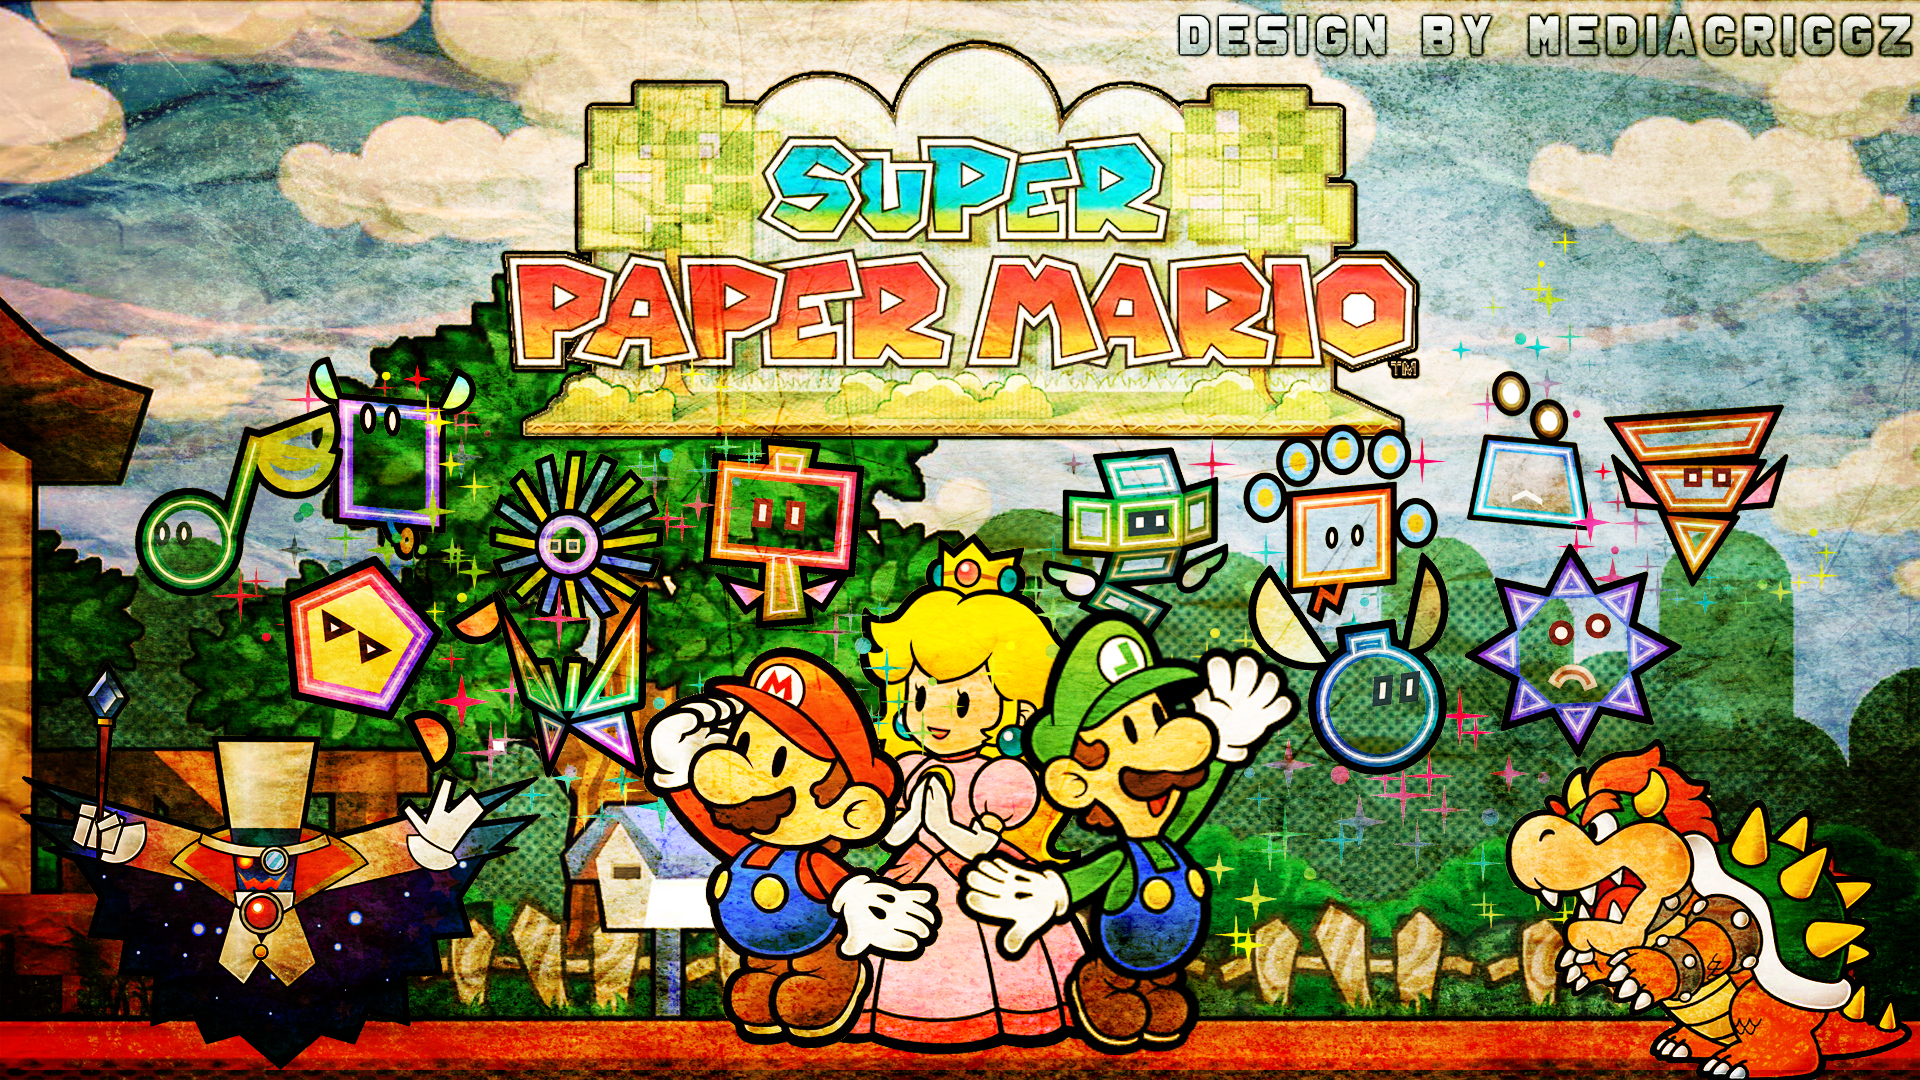 Super Paper Mario Wallpaper by MediaCriggz on DeviantArt